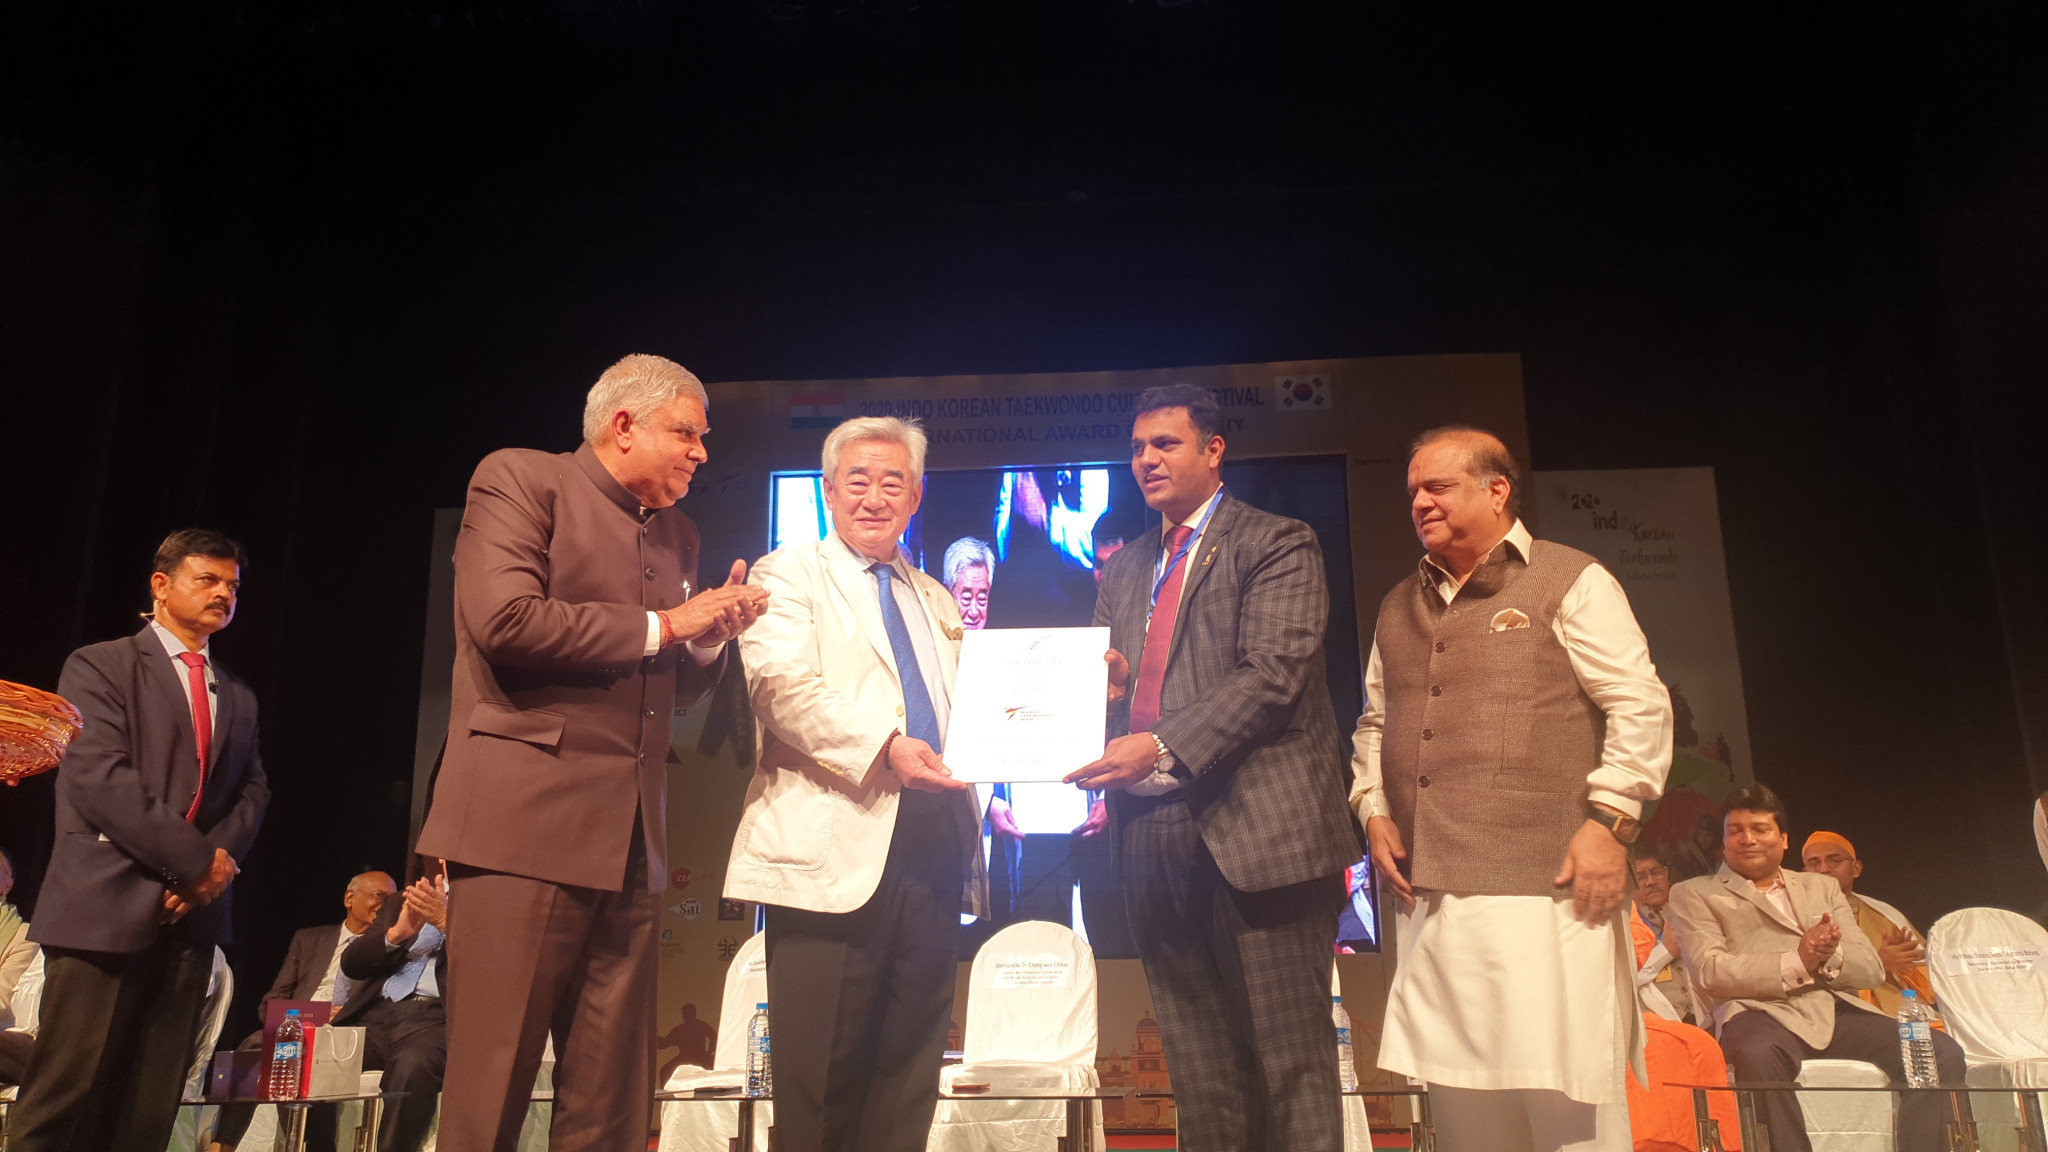 Choue "honoured" to attend taekwondo festival in India